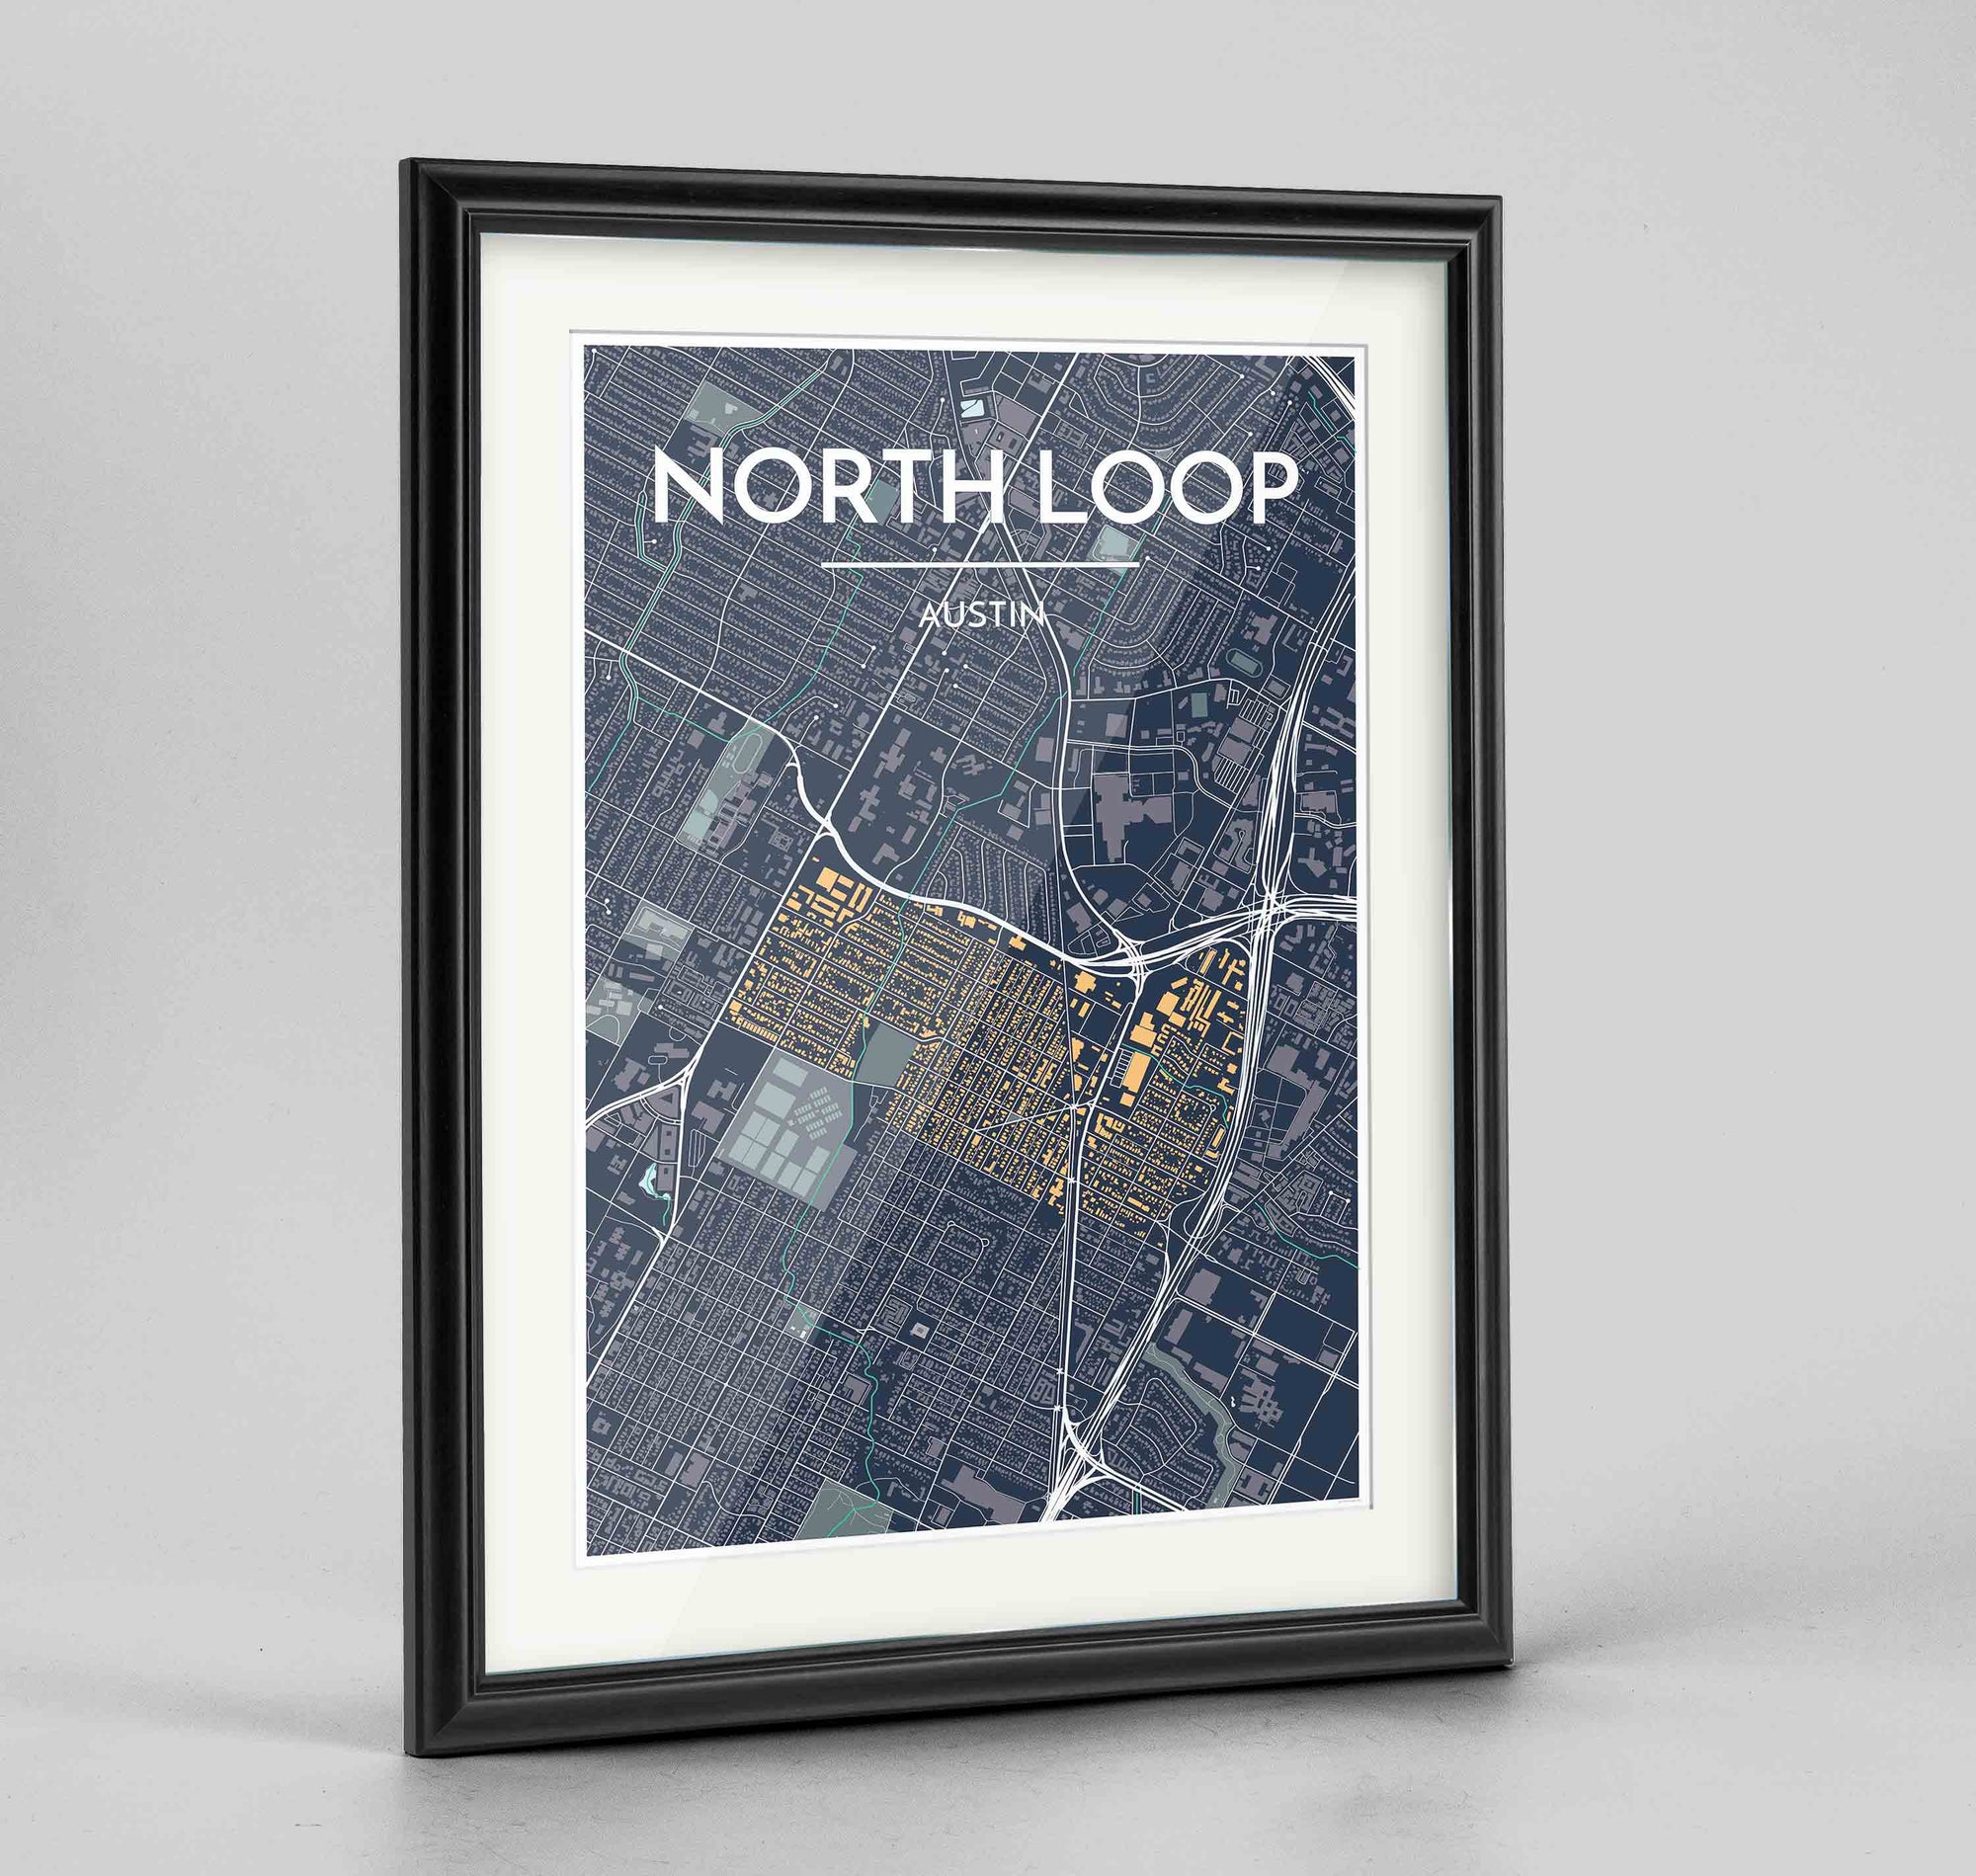 Framed Noe Valley, San Francisco Map Art 24x36" Traditional Black frame Point Two Design Group